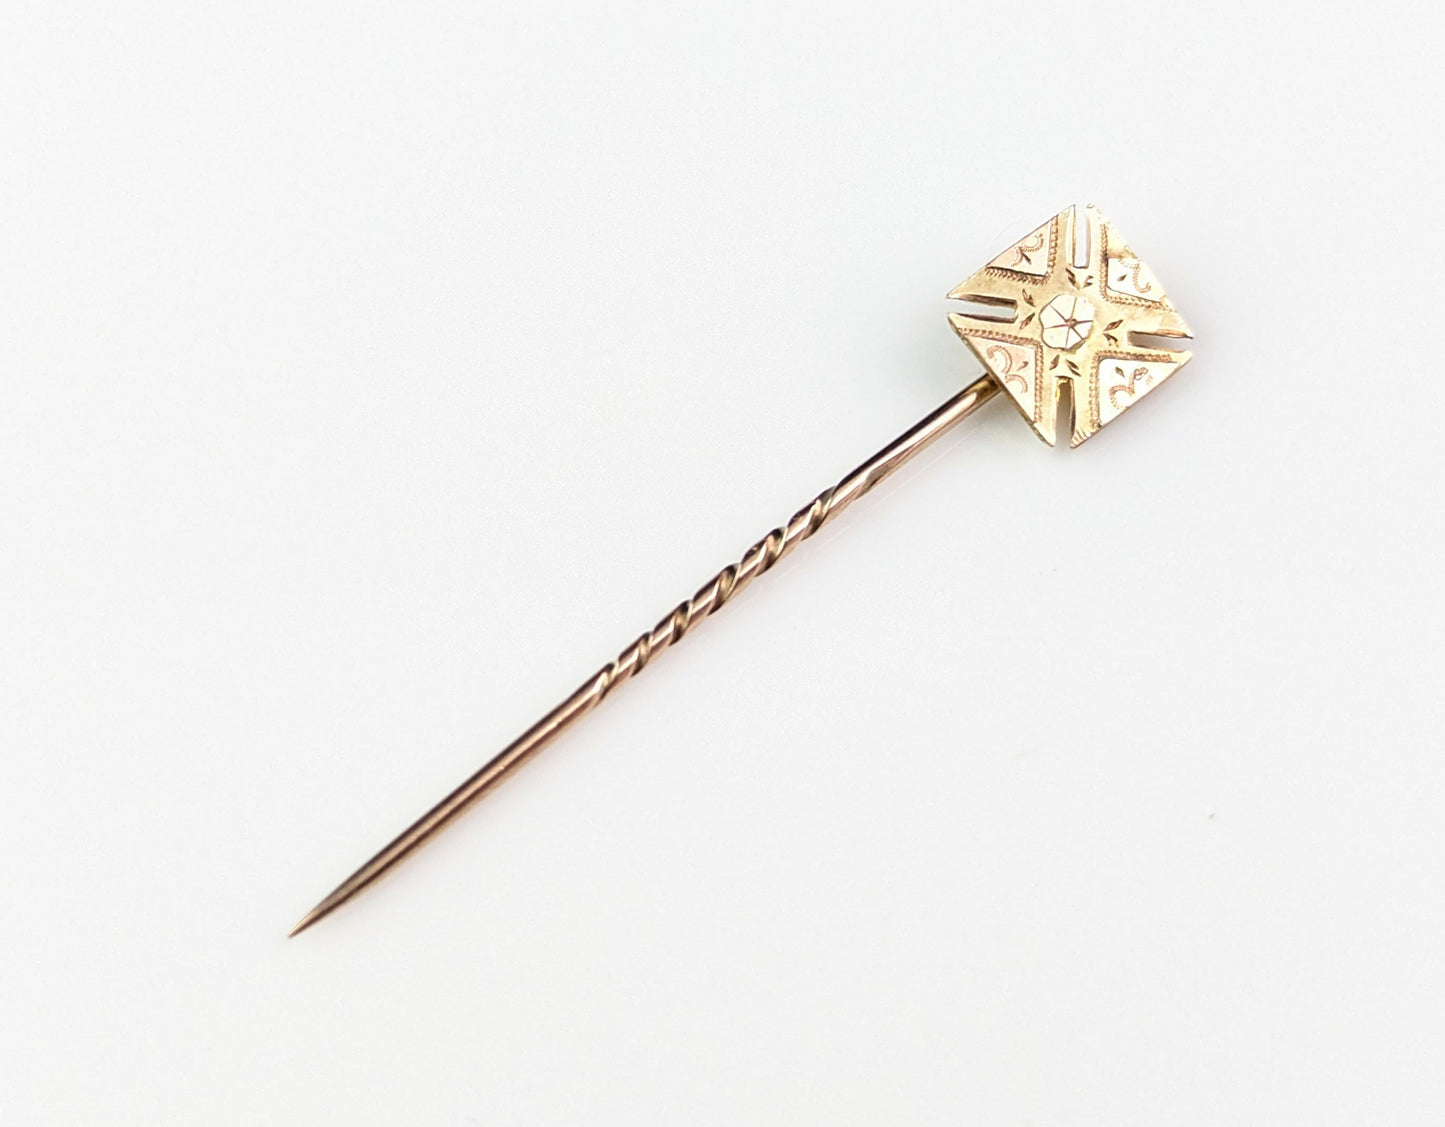 Vintage Art Deco 9ct gold stick pin, Cross Pattee